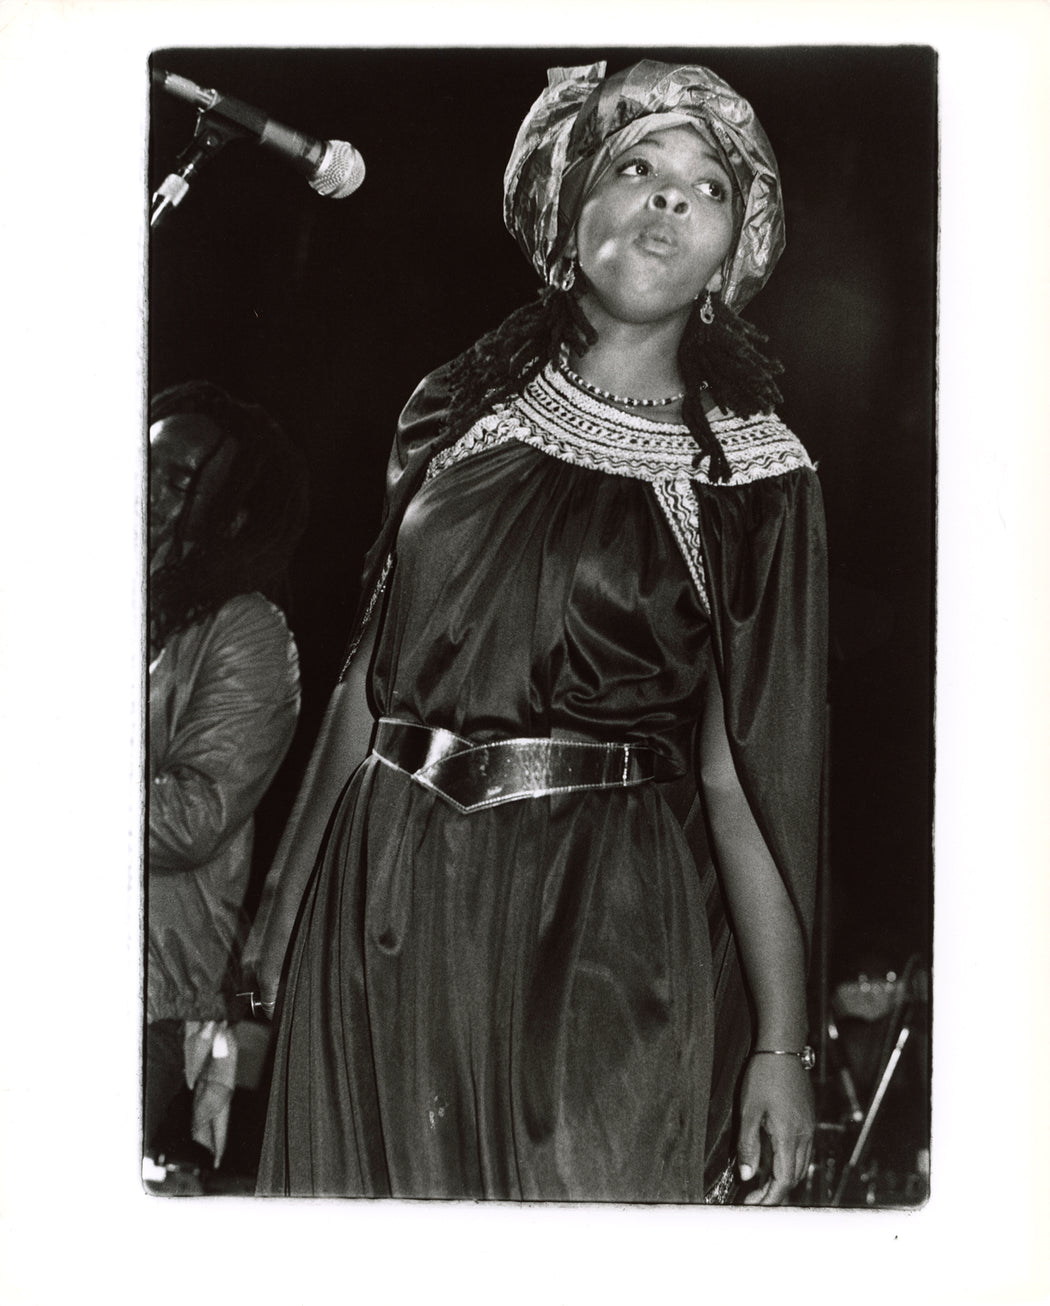 Puma Jones, Black Uhuru, Concert Hall, Toronto